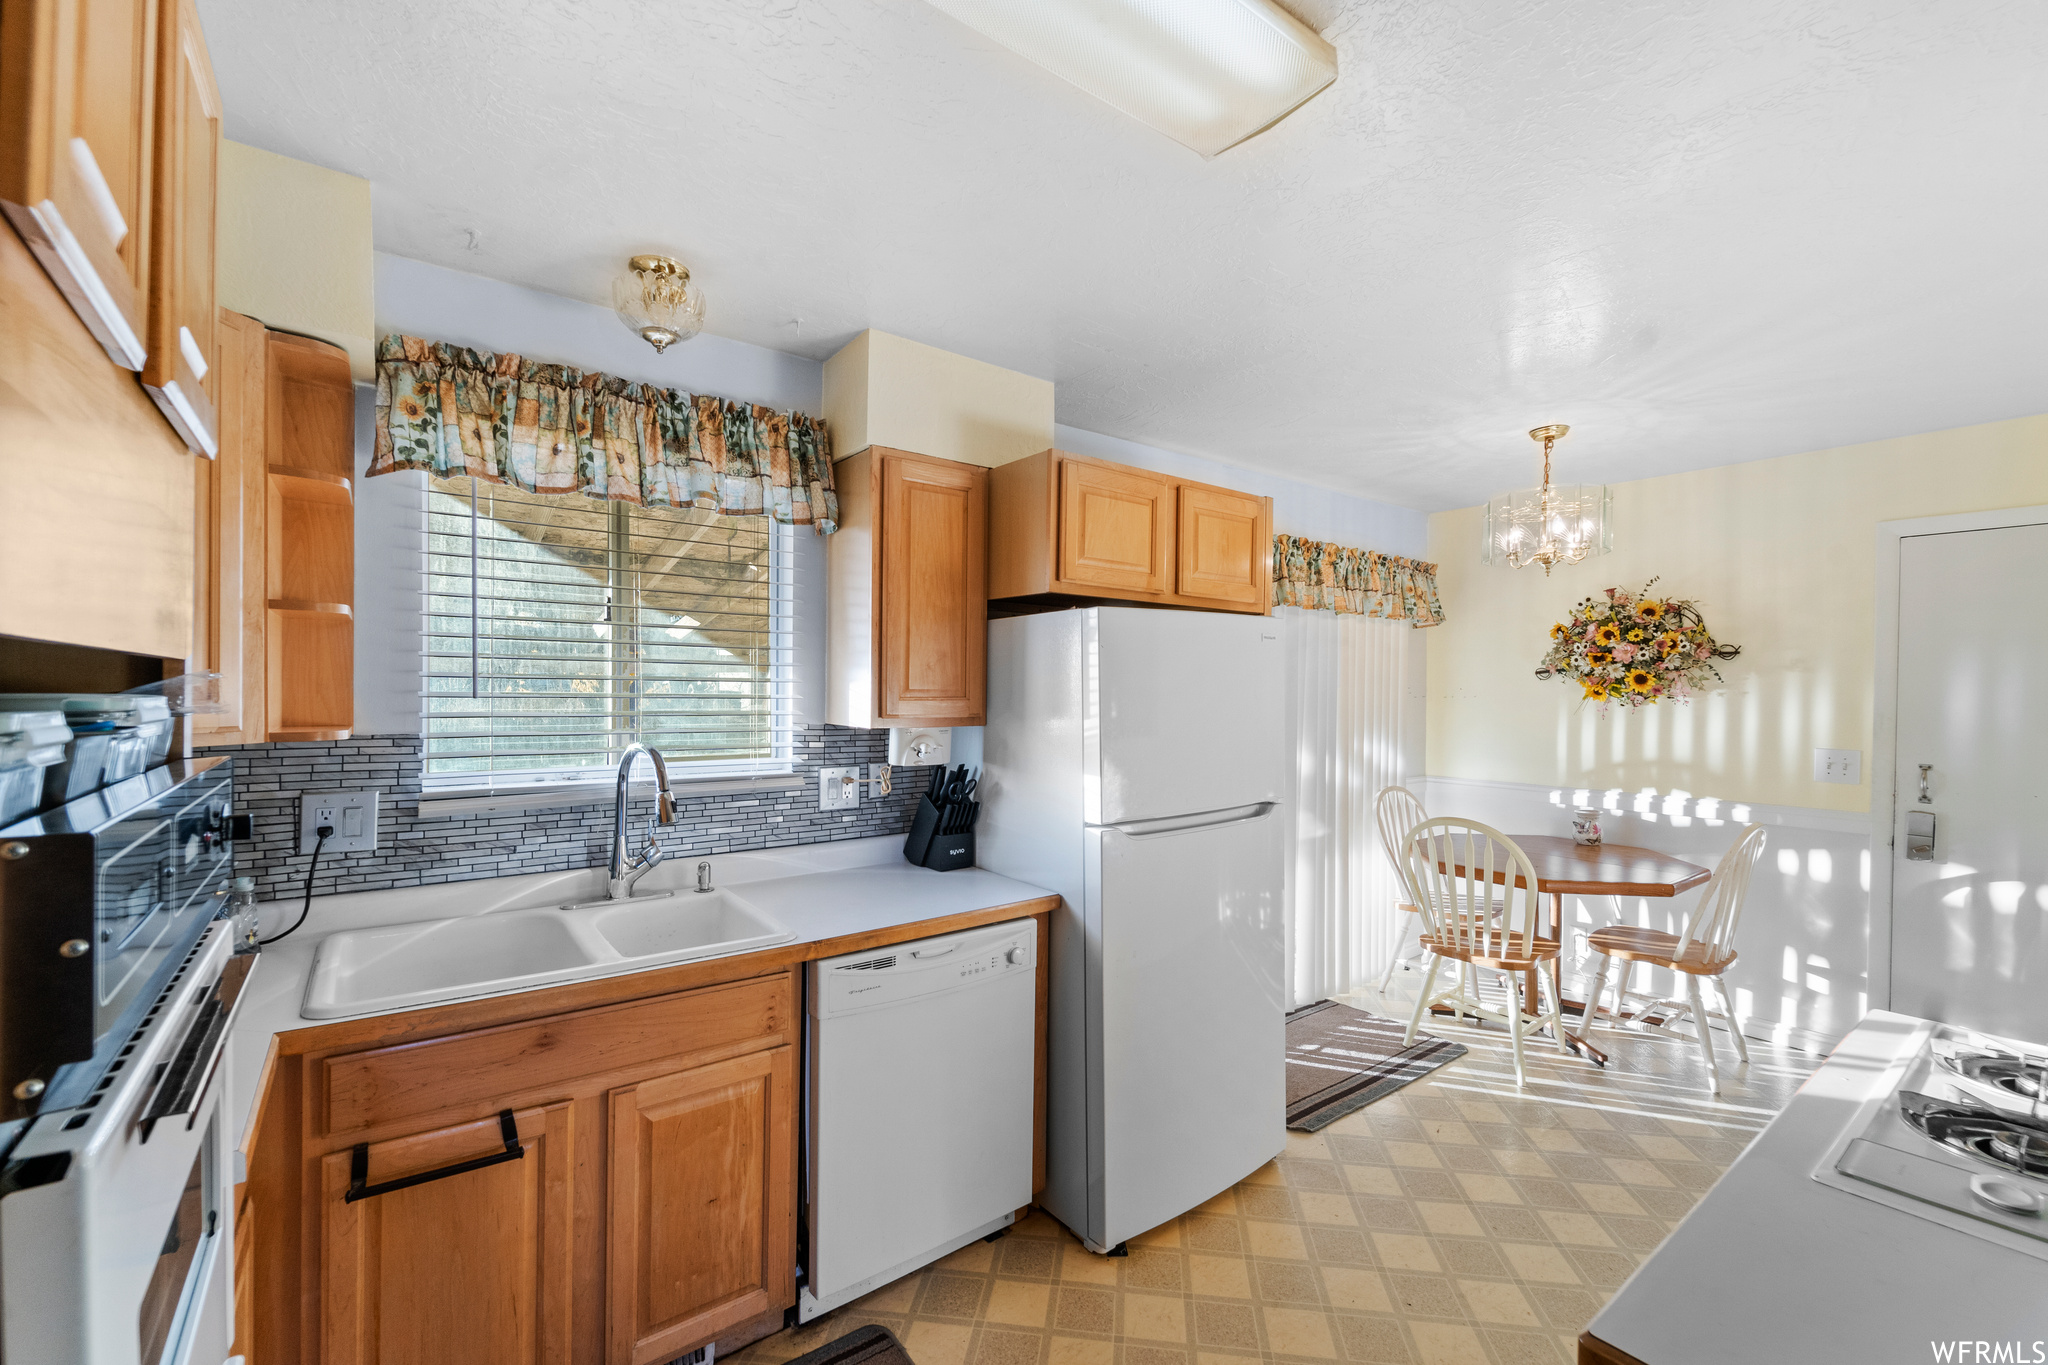 Kitchen with hanging light fixtures, sink, white appliances, backsplash, and light tile floors